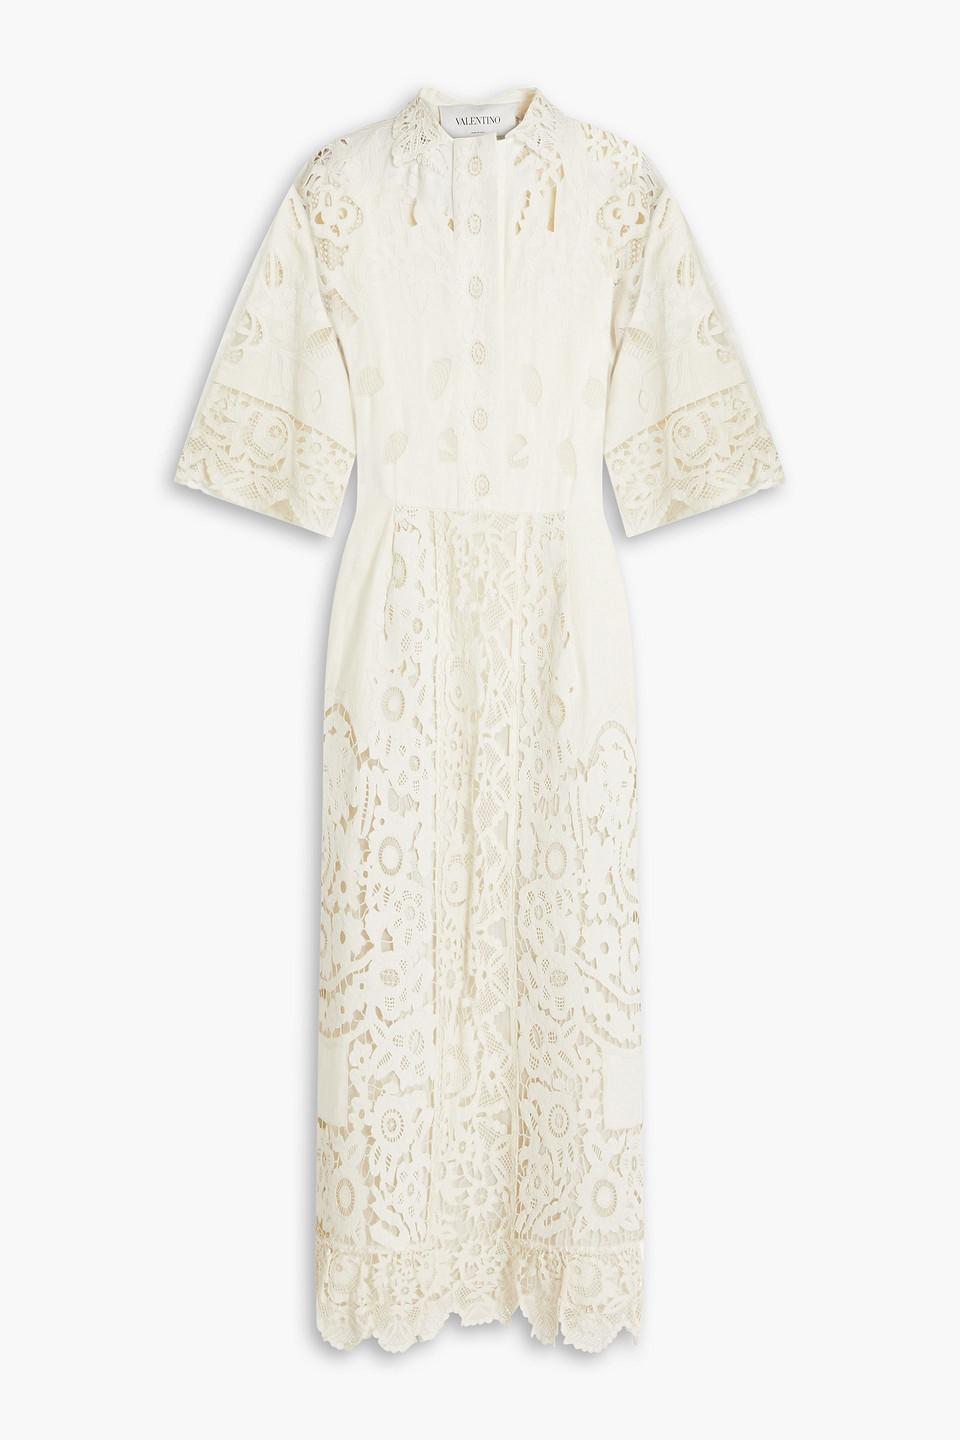 Valentino Guipure Lace Linen Maxi Dress in White | Lyst